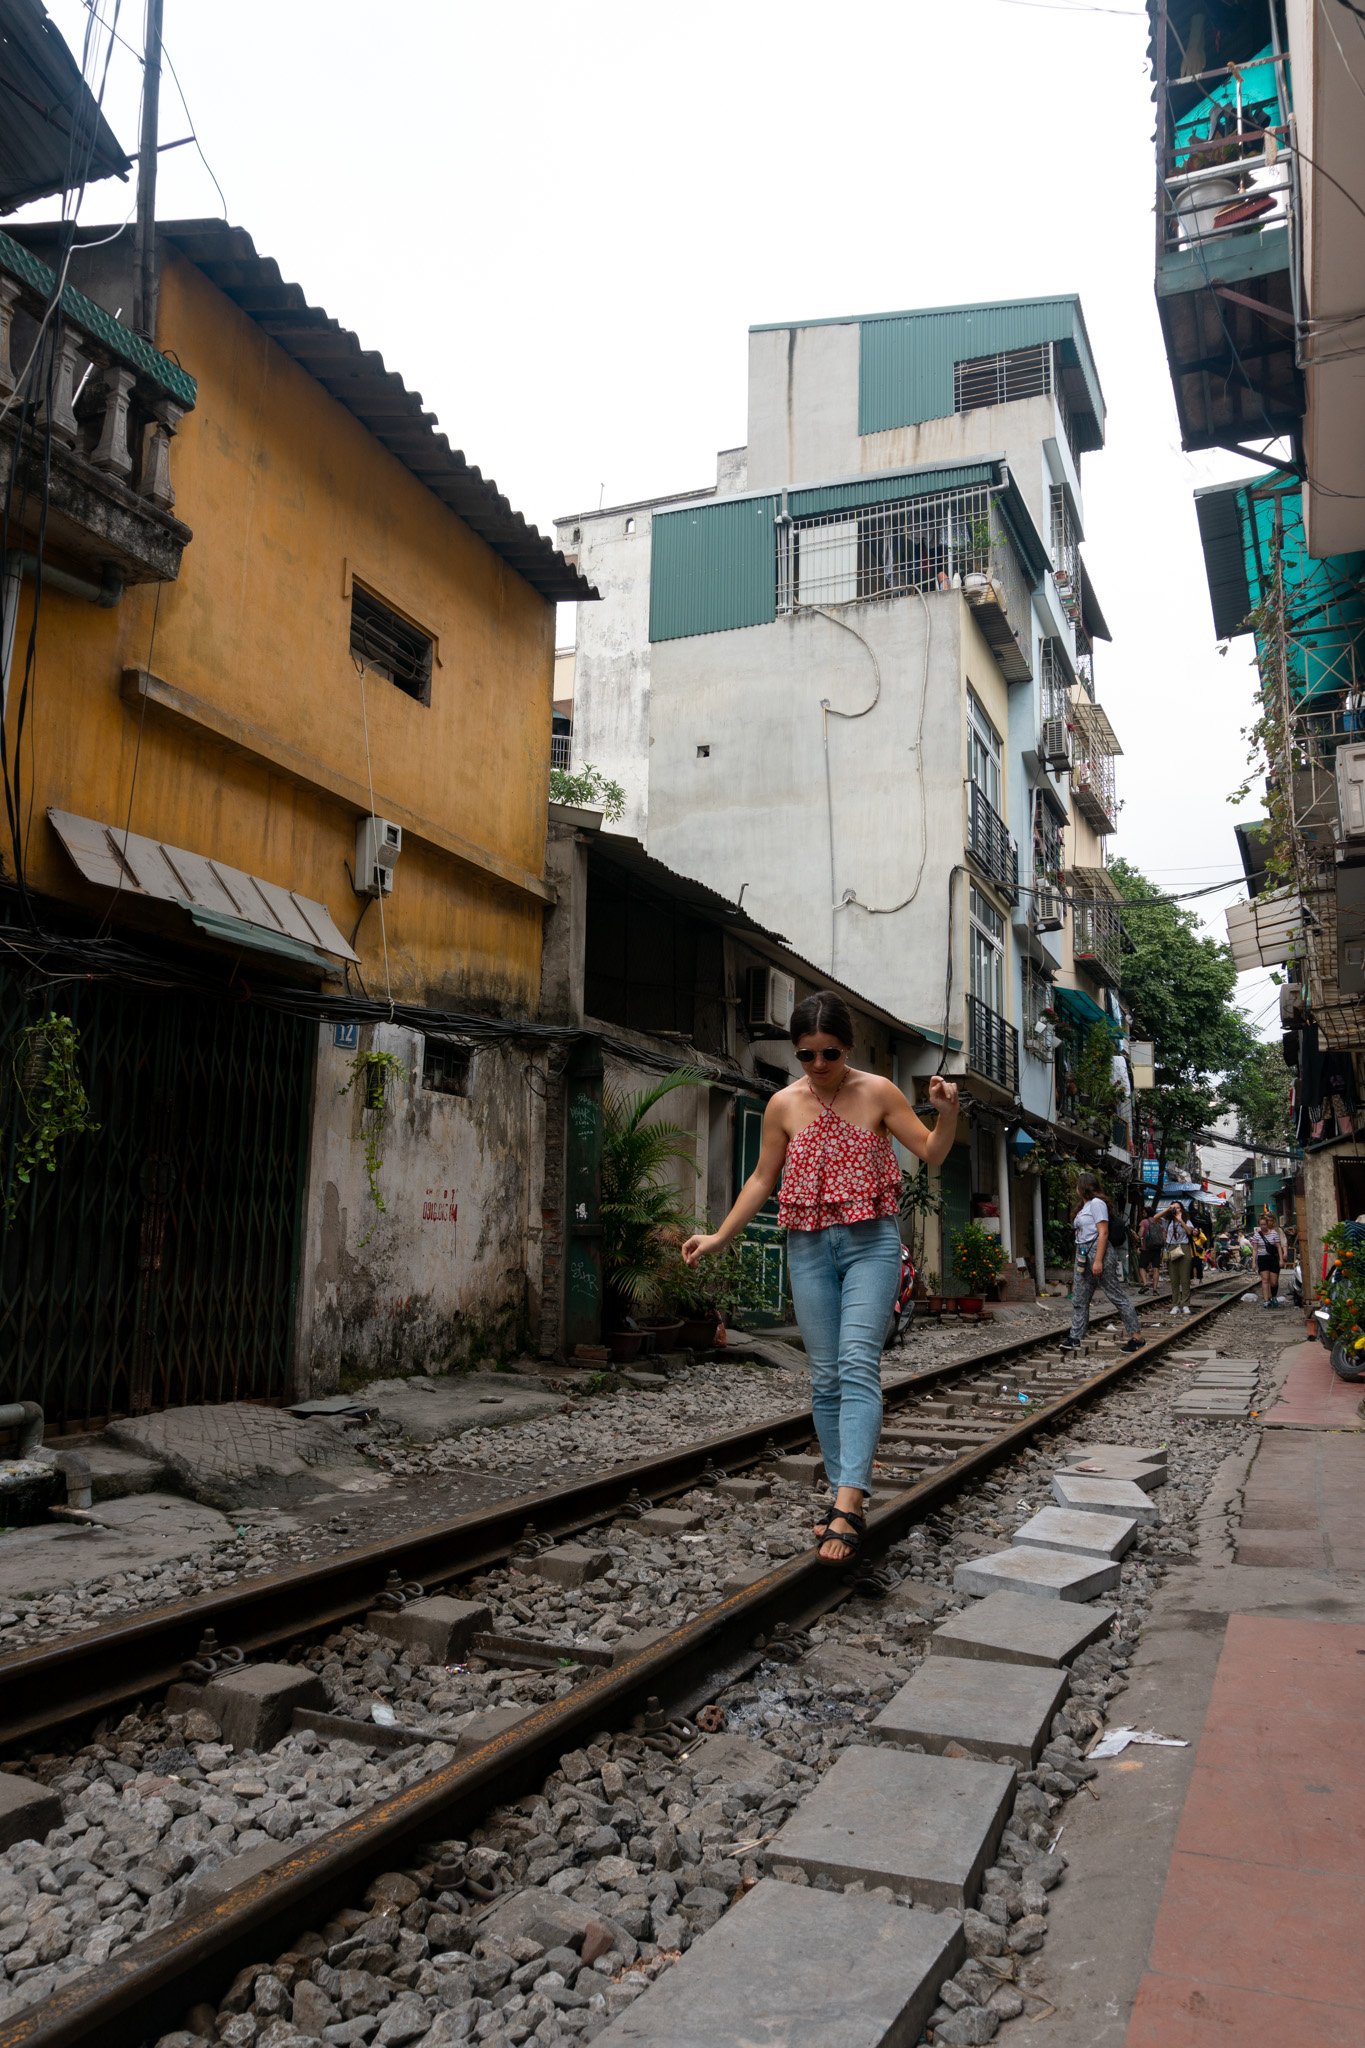 the train tracks at Train Street, Hanoi, Vietnam